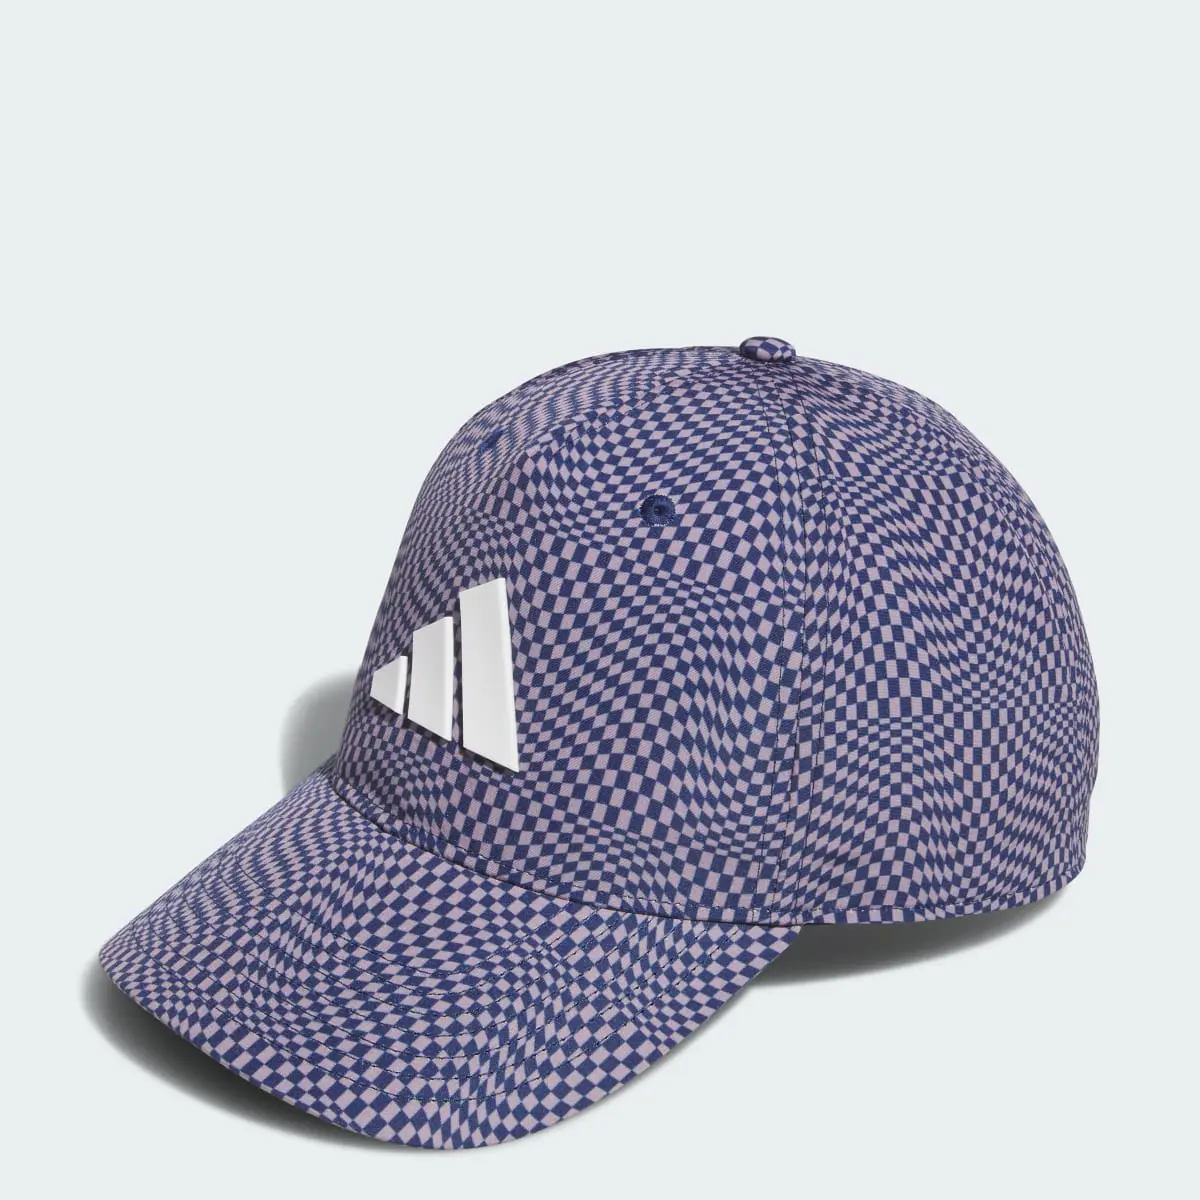 Adidas Tour Printed Snapback Hat. 1